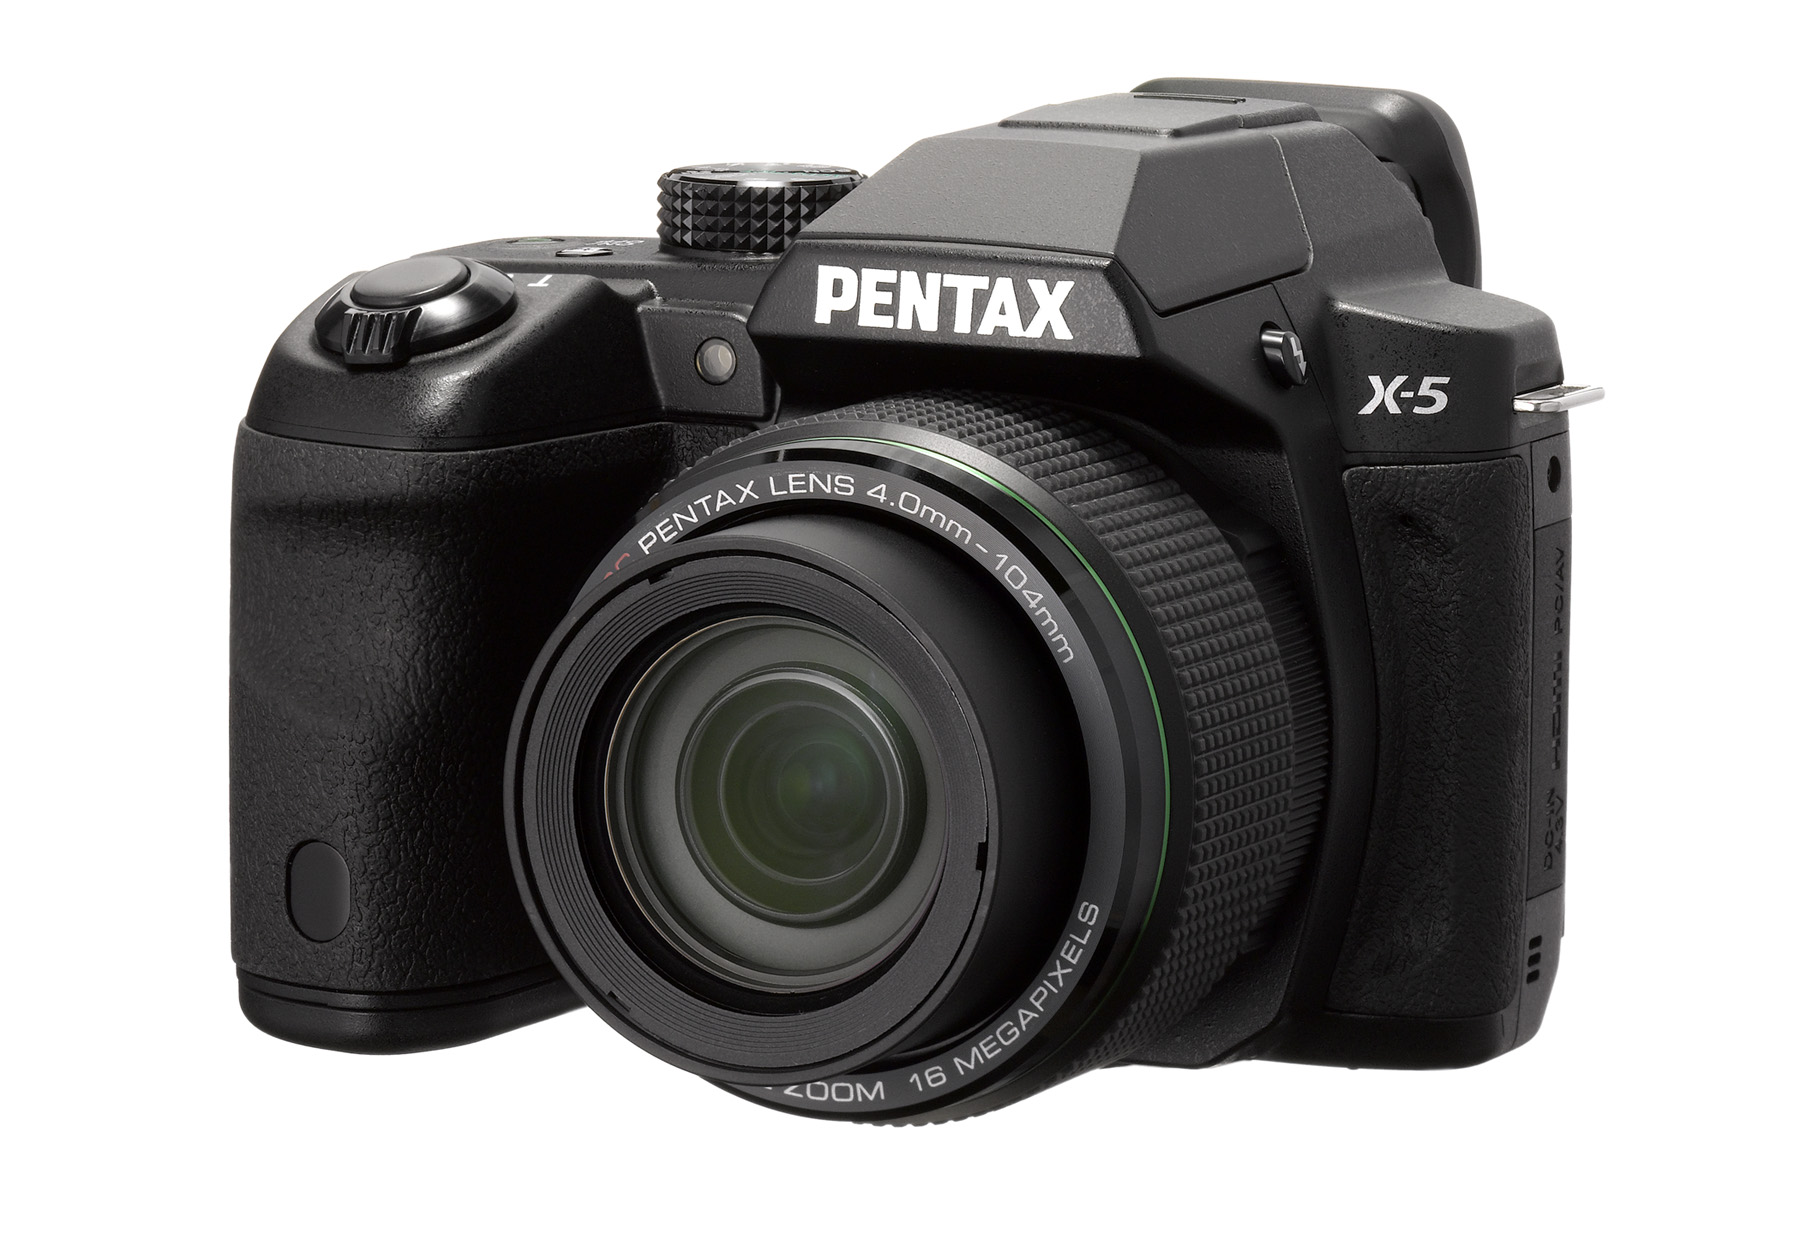 Introducing the Pentax X-5 Camera